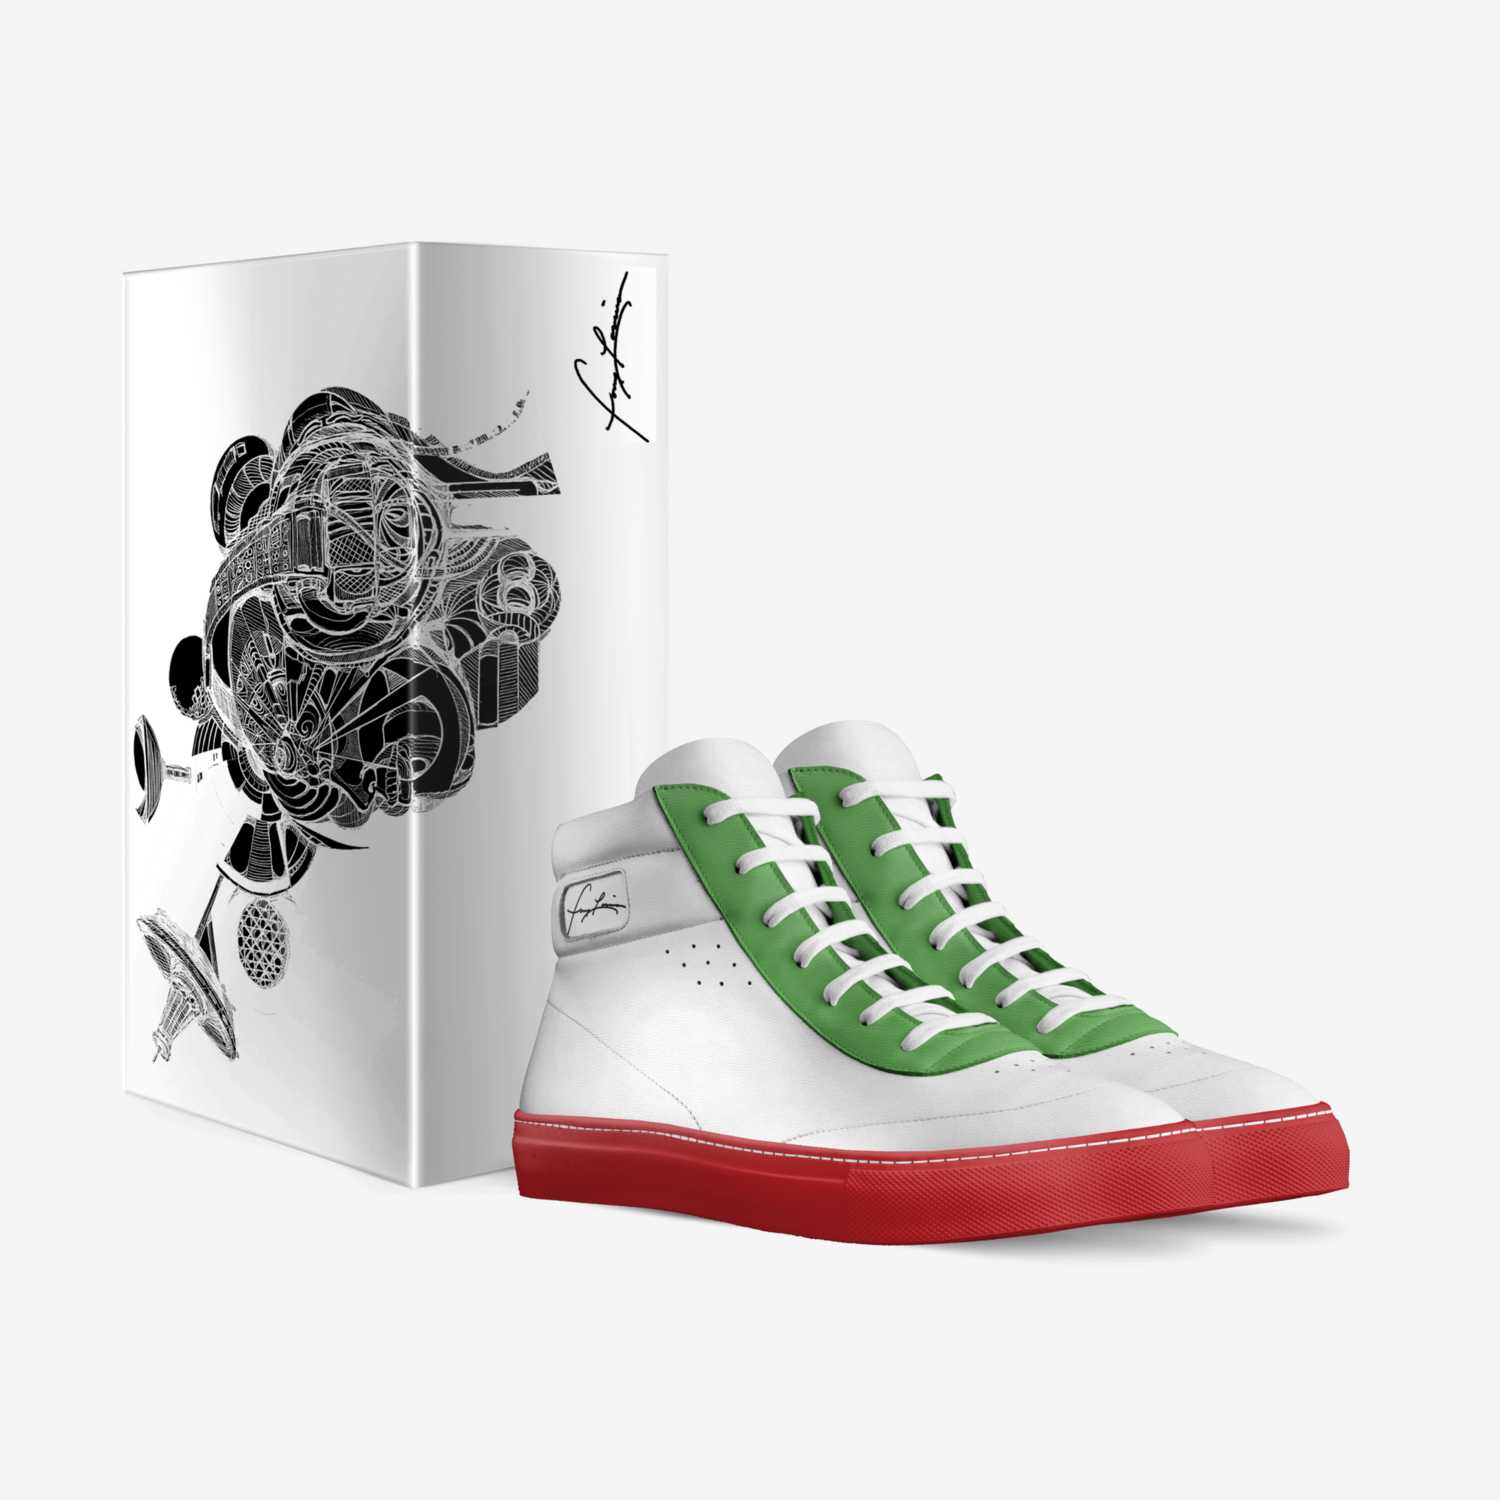 Laveria Inc. | A Custom Shoe concept by Tony A Wilburn